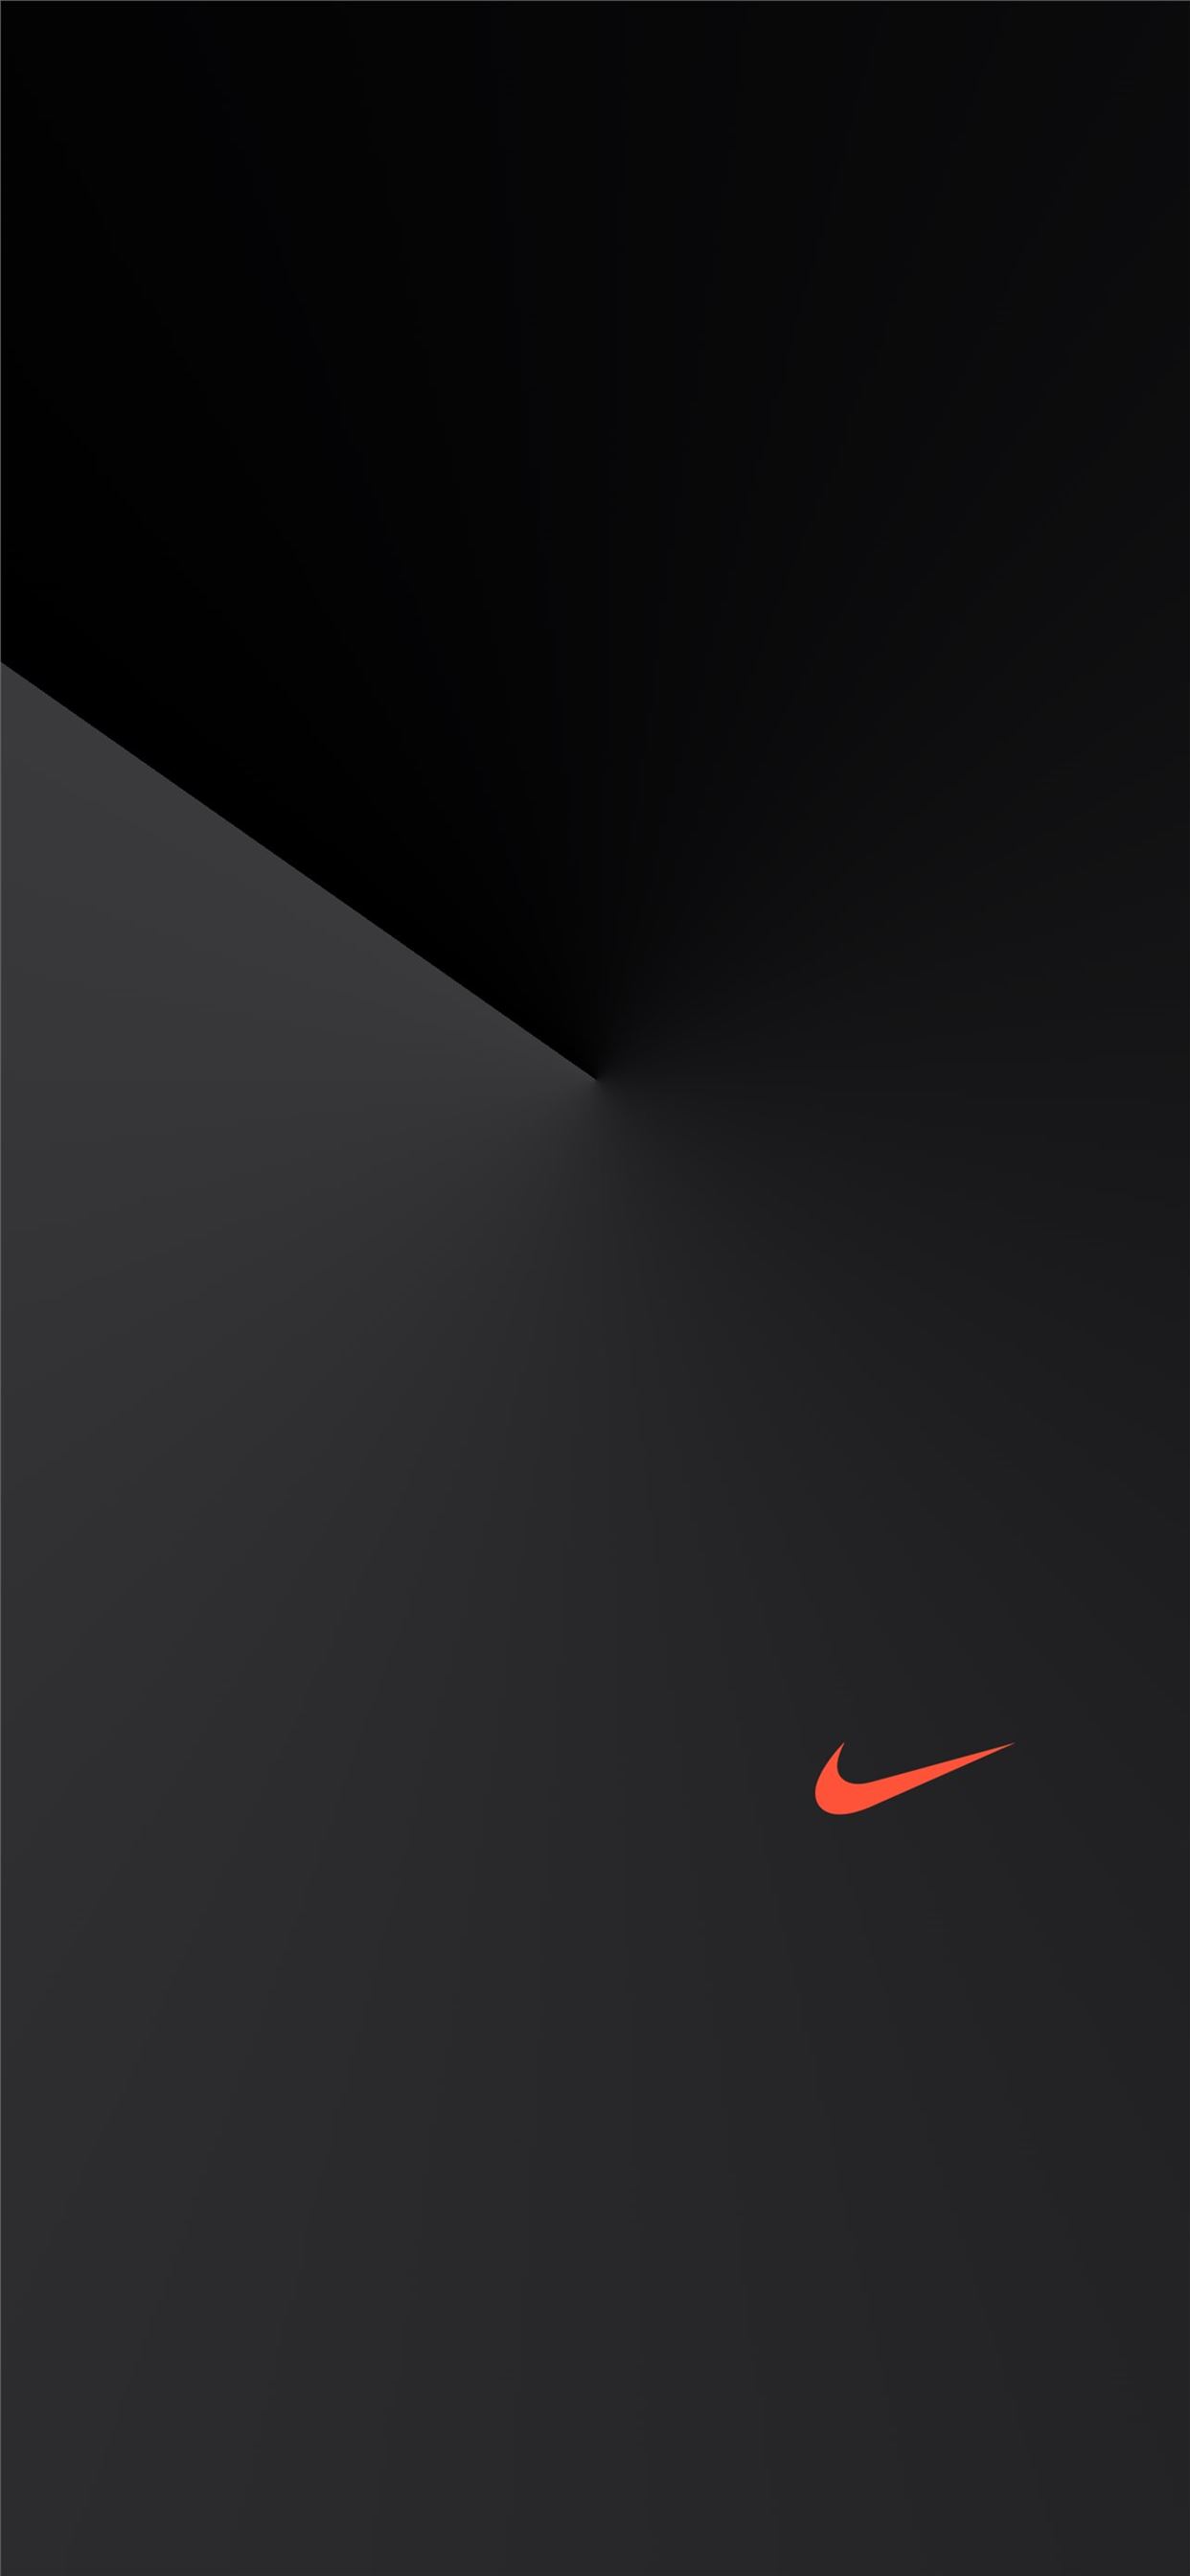 Nike Dark Iphone Wallpapers Free Download